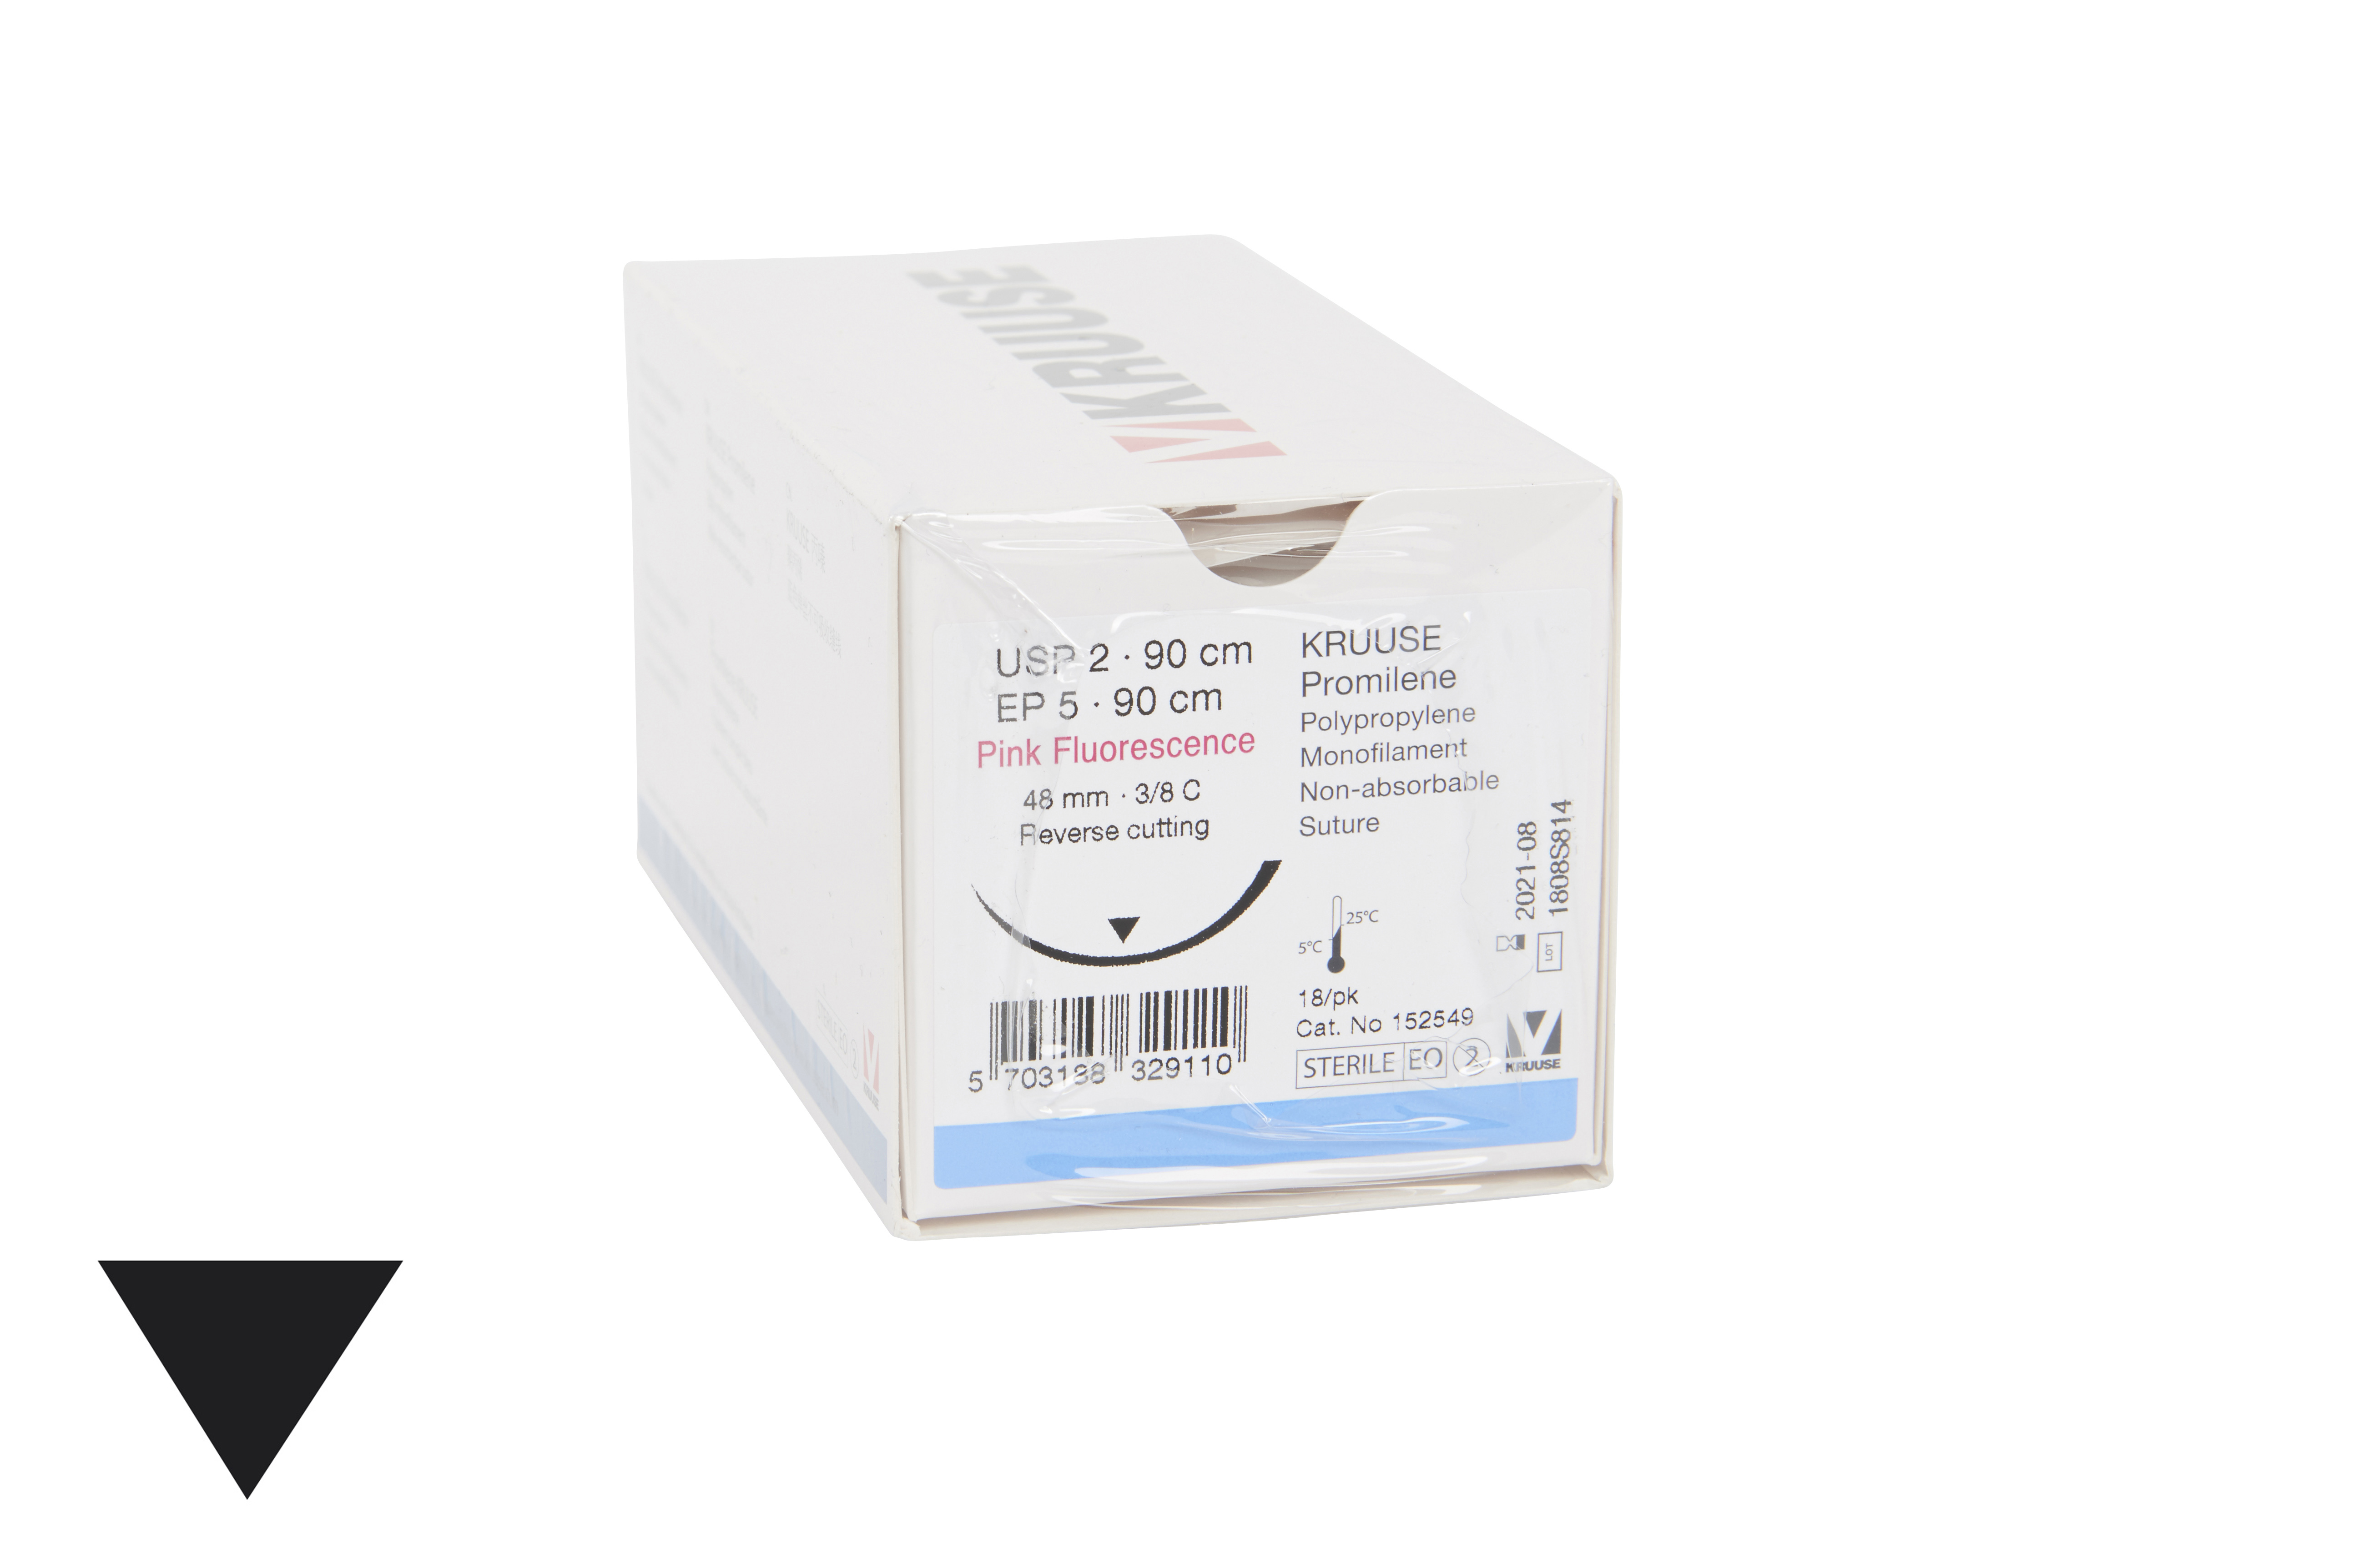 KRUUSE Promilene Suture, USP 2/EP 5, 90 cm, pink (fluorescence), needle: 48 mm, 3/8 C, RC, 18/pk